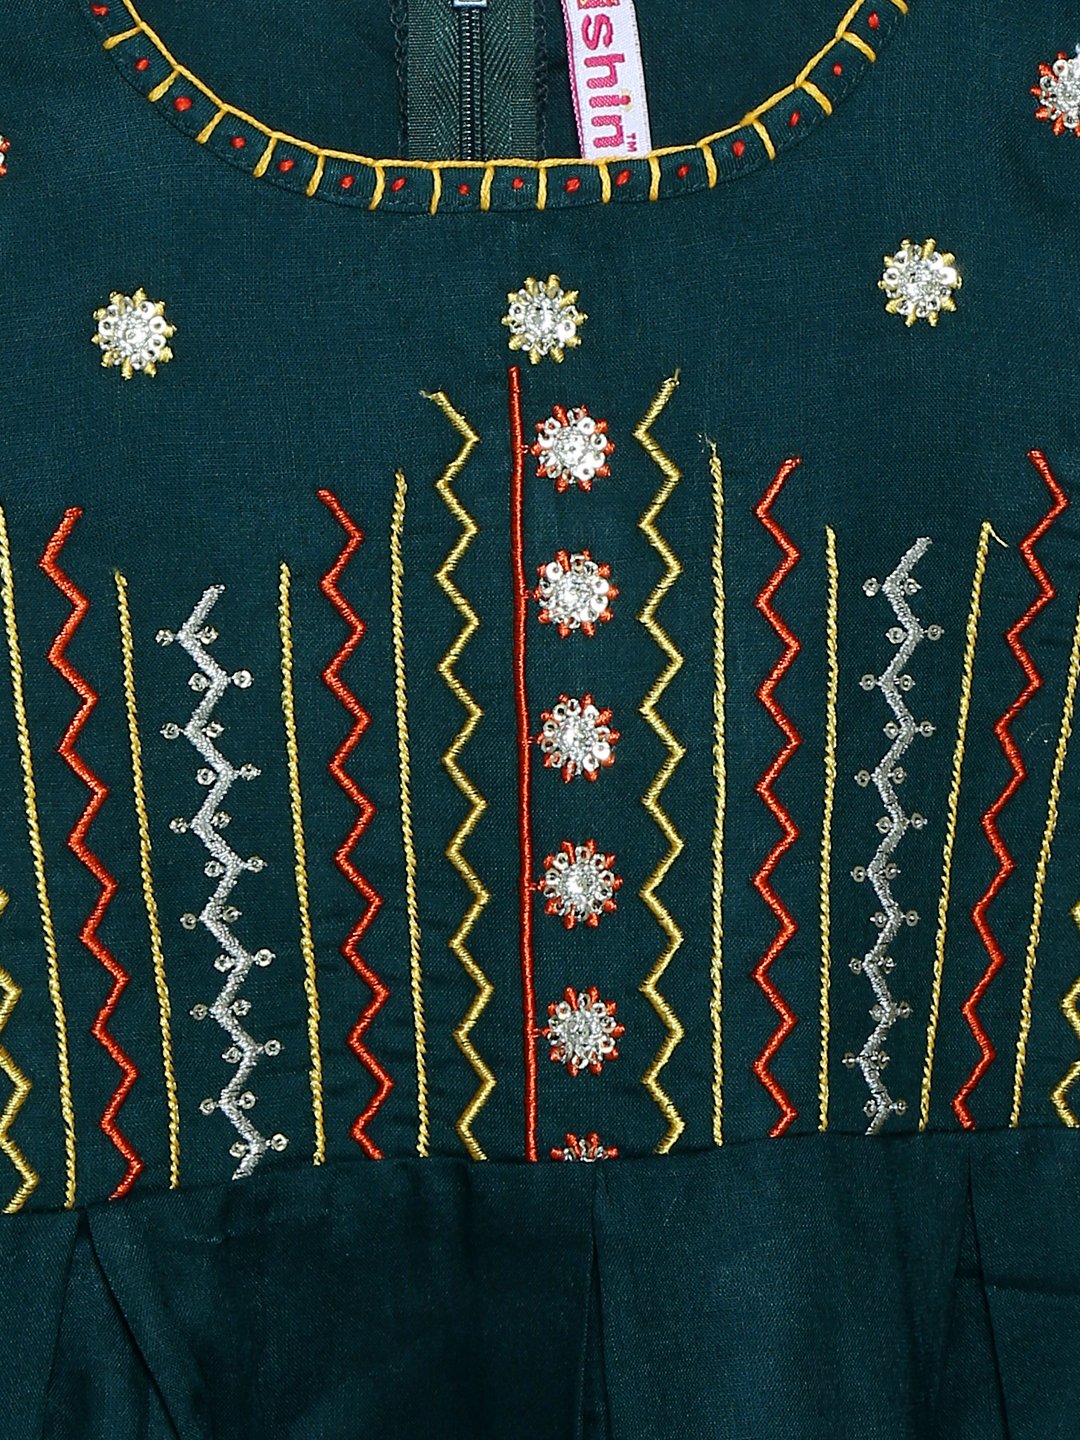 Ishin Girls Viscose Rayon Teal Embroidered Top